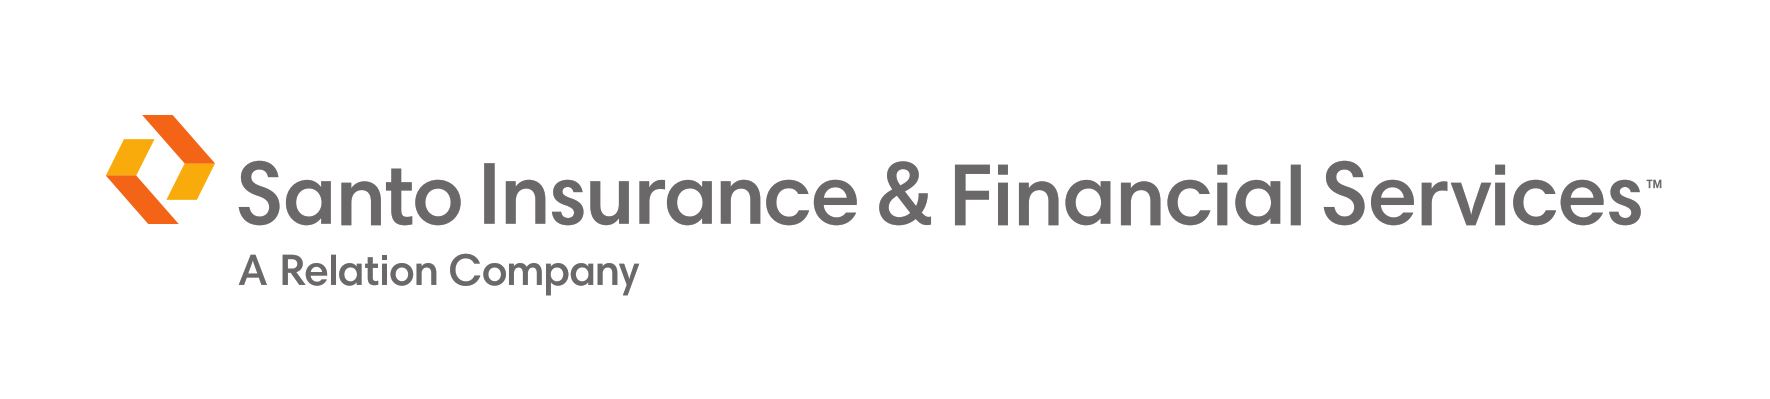 Santo Insurance & Financial Services